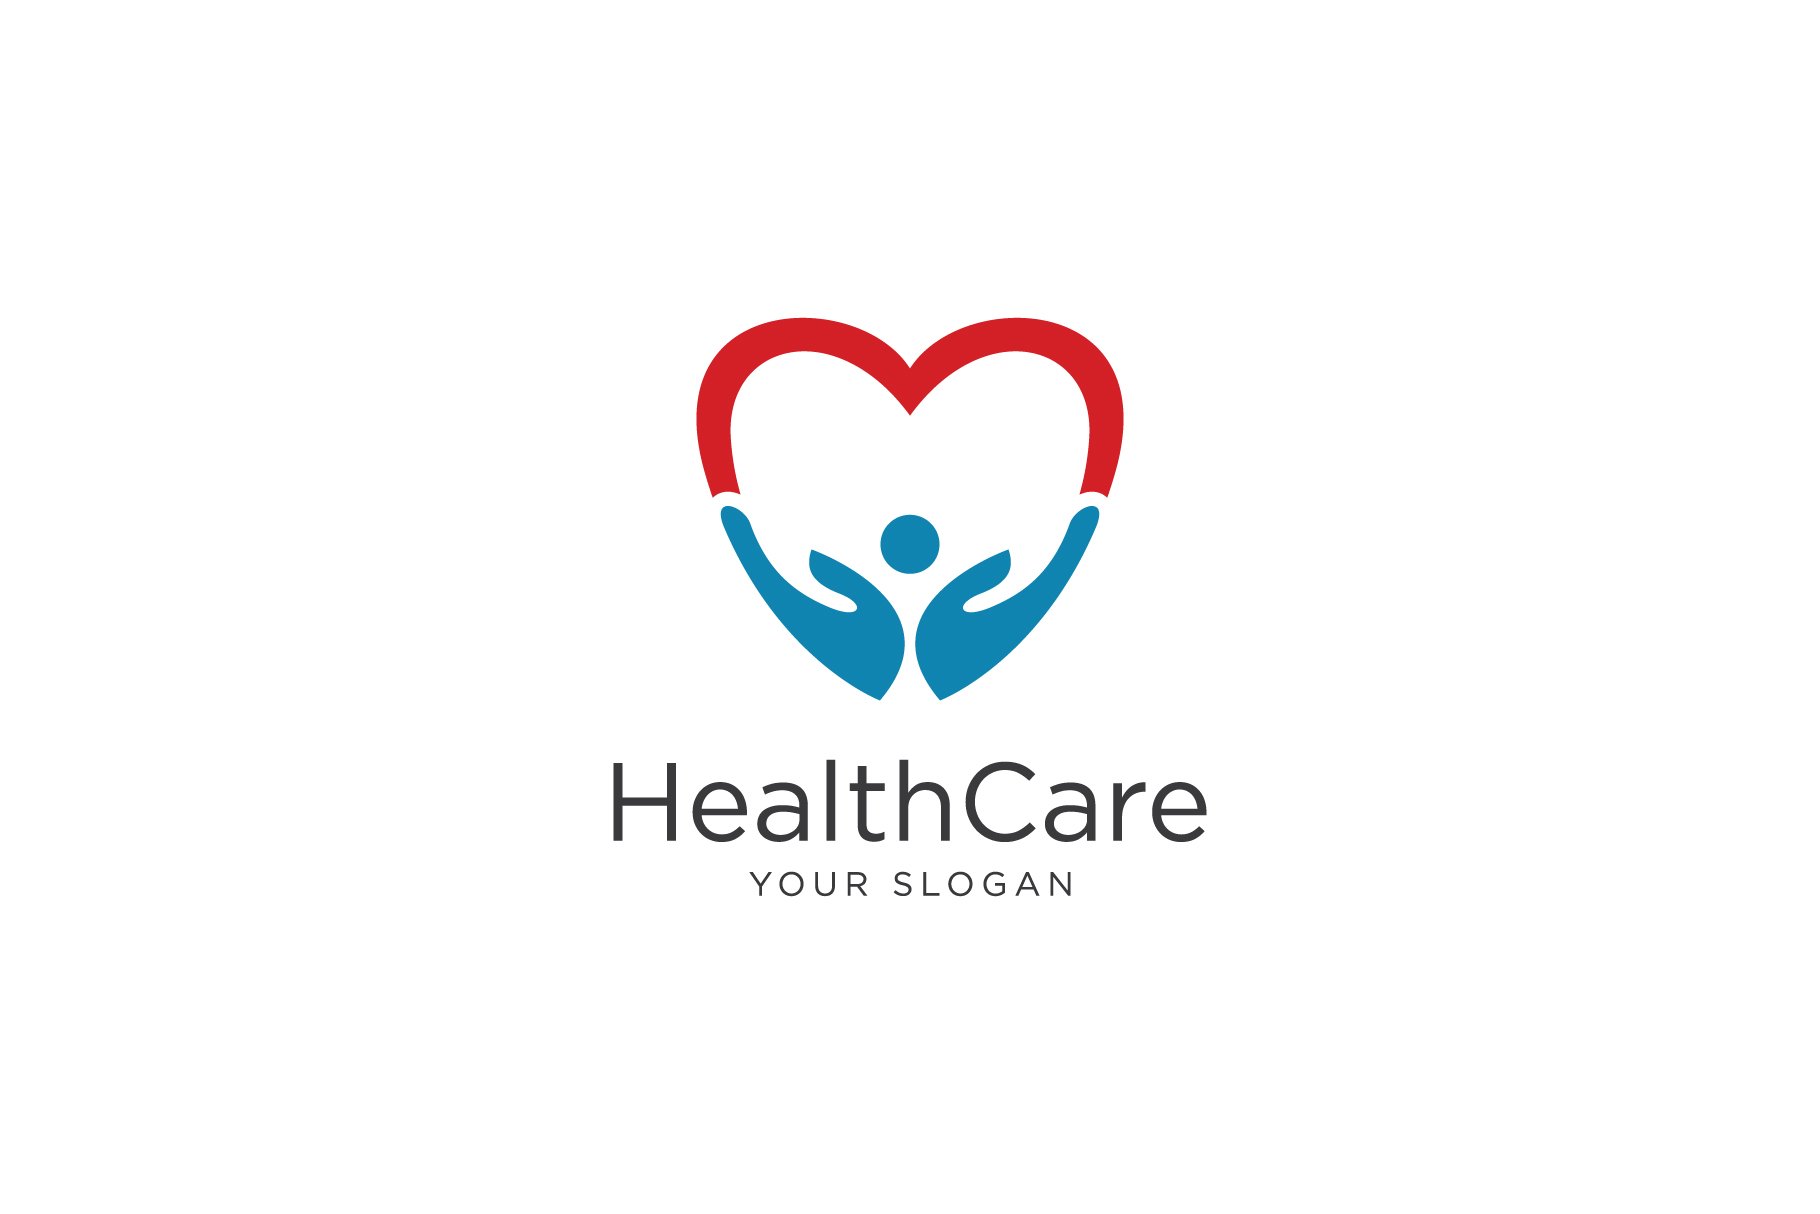 Health Care Logo preview image.